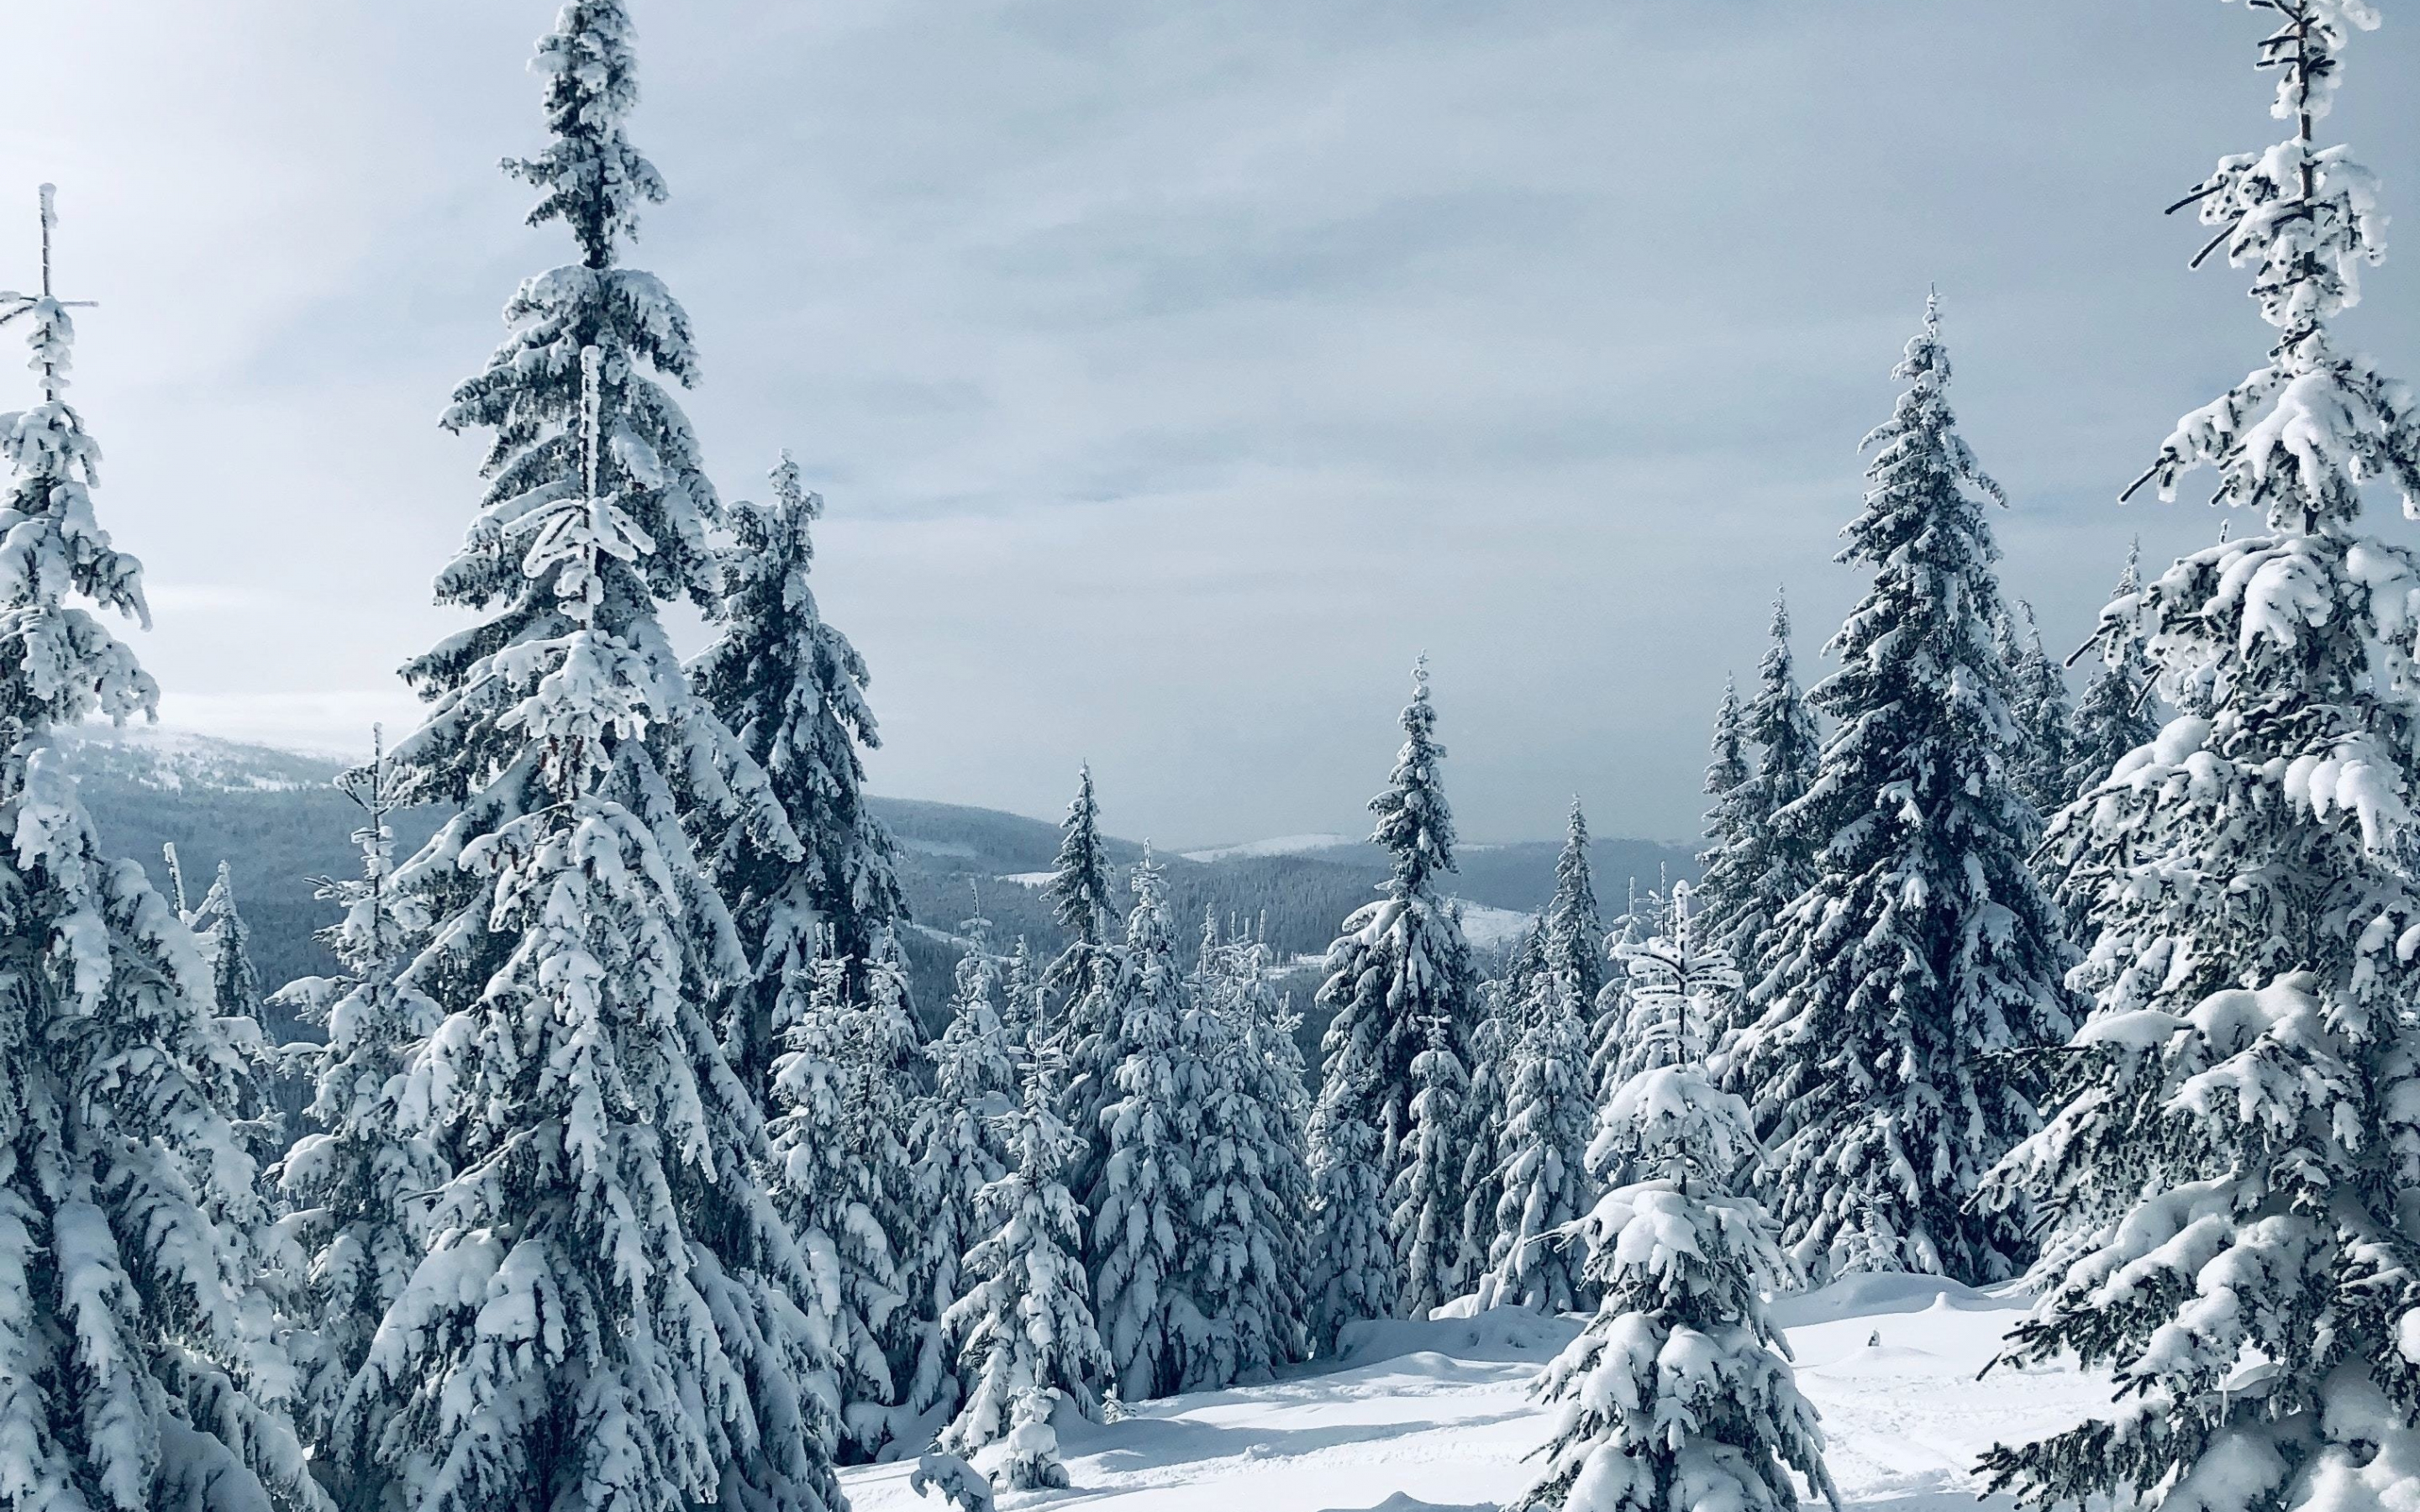 Download x1800 Wallpaper Winter Pine Trees Nature Landscape Tree Mac Pro Retaia Image Background